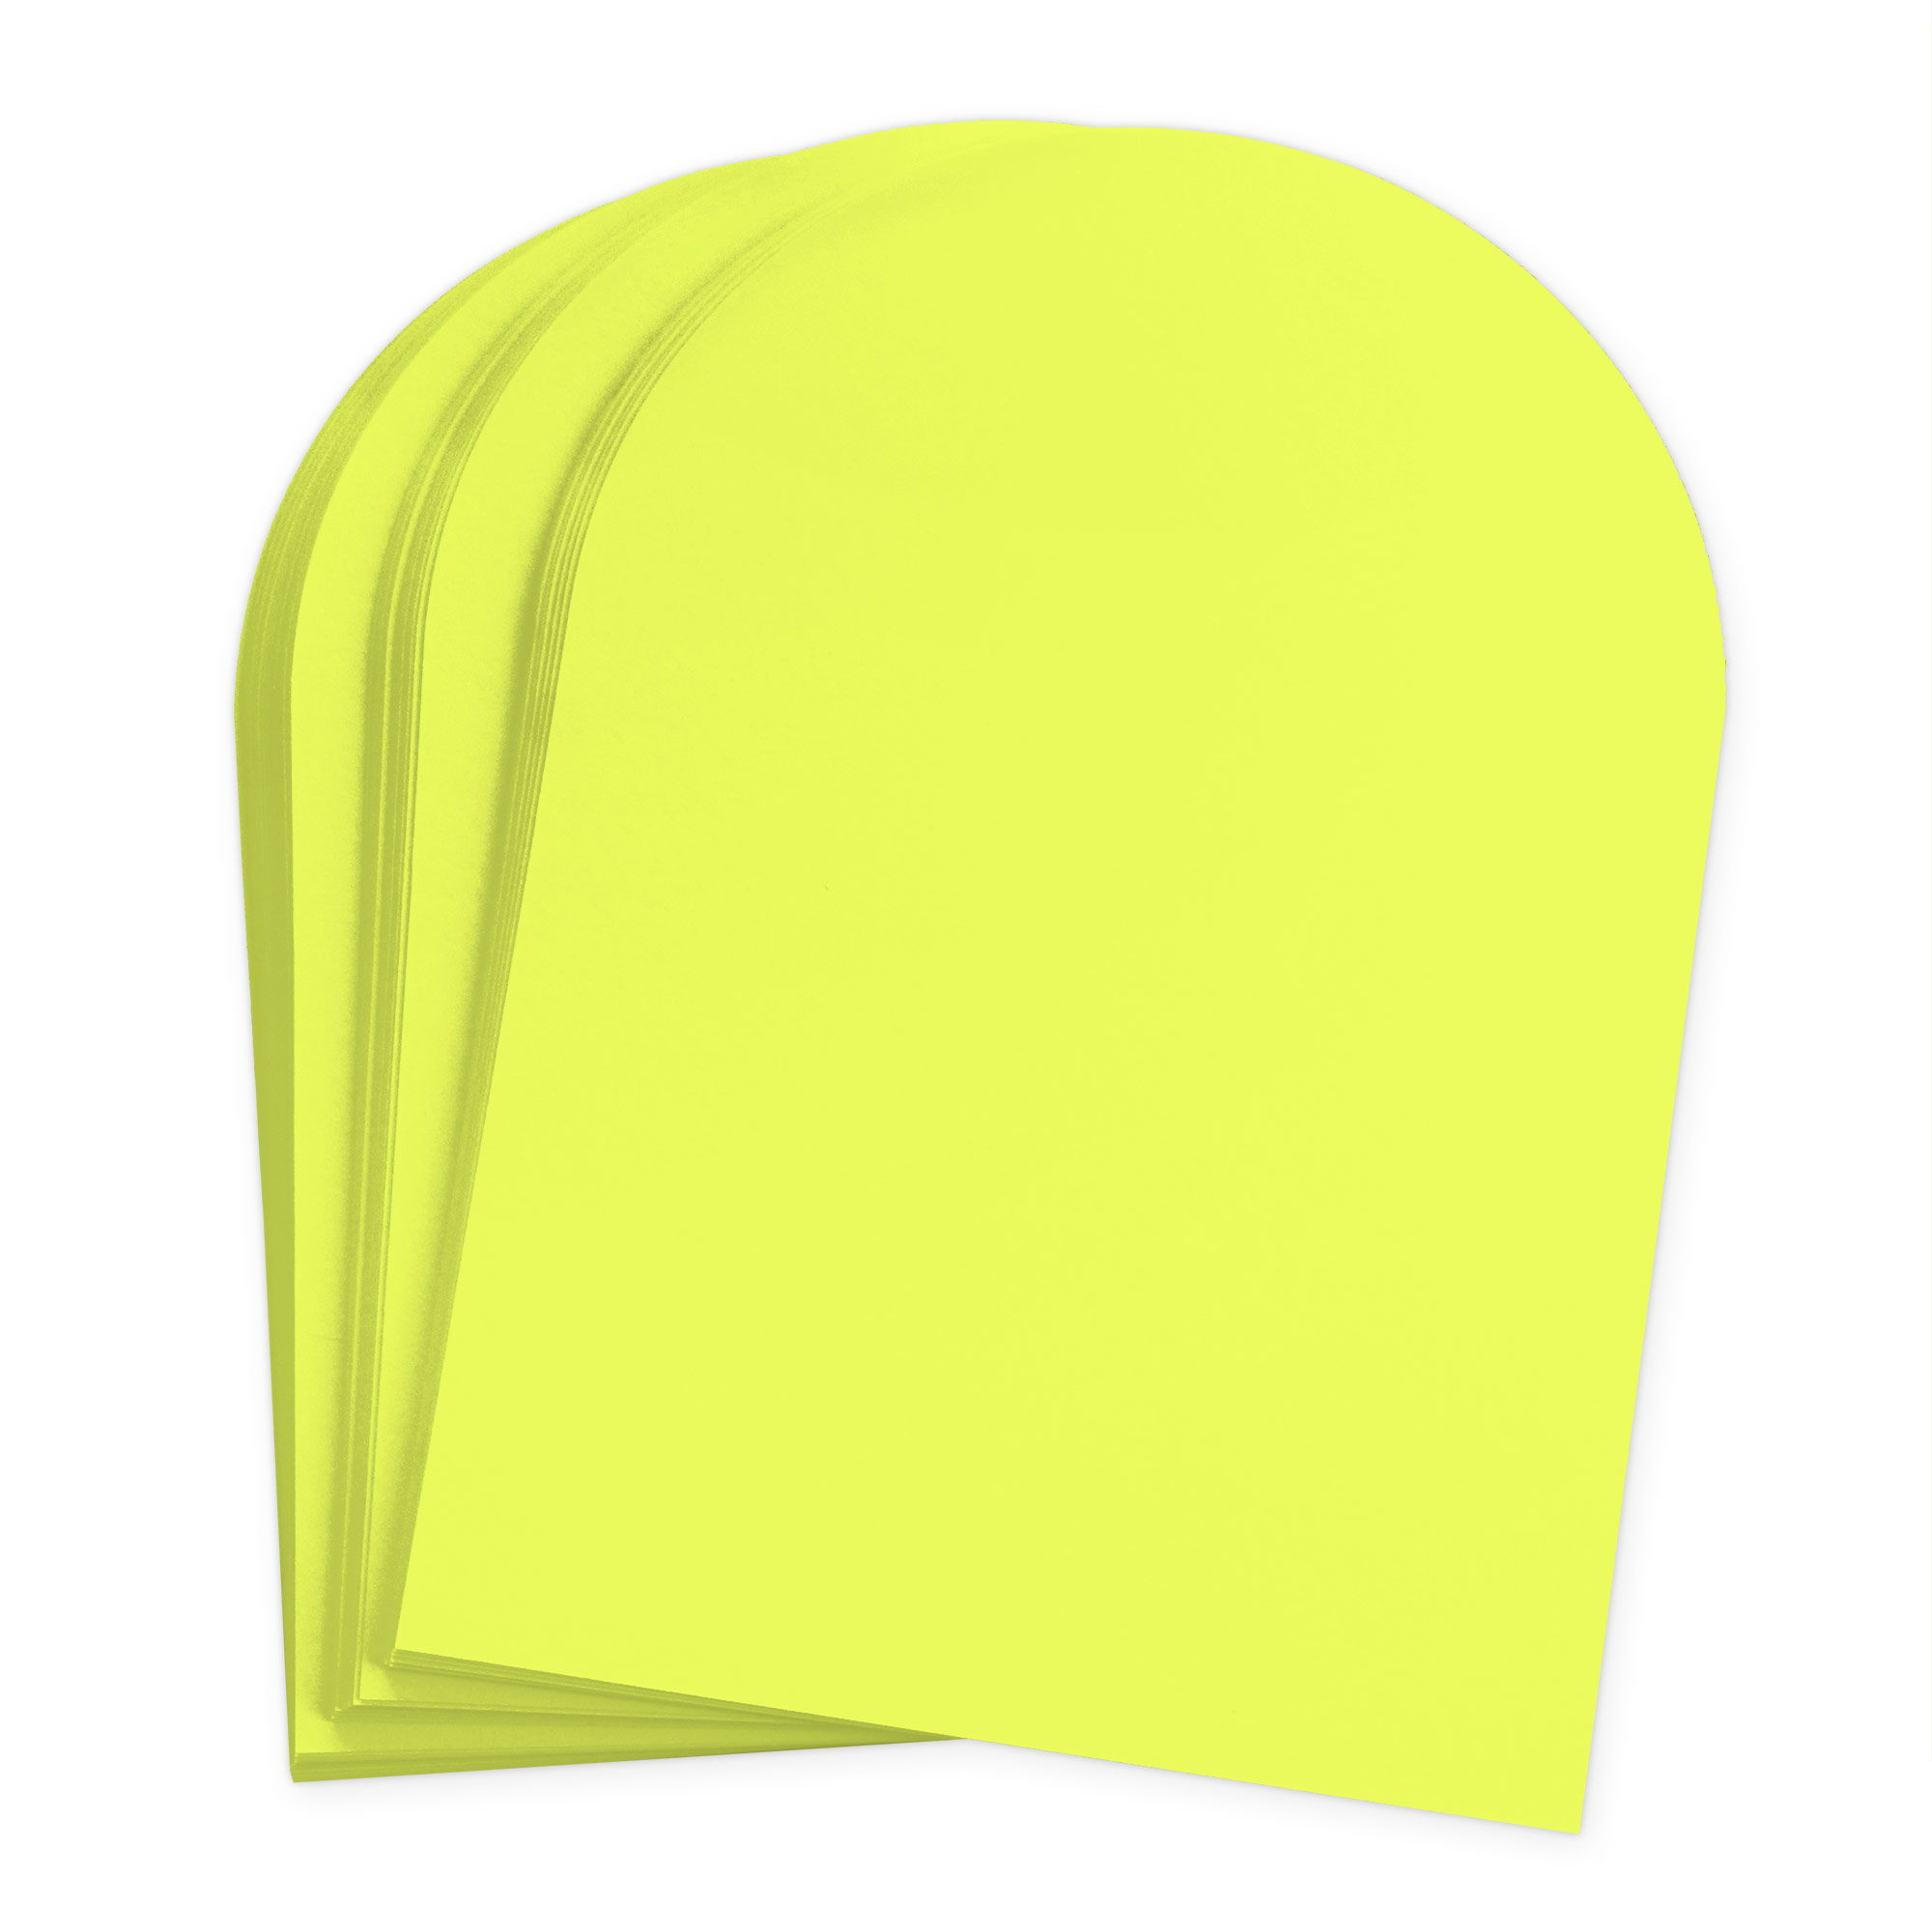 Key Lime Arch Shaped Card - A2 Gmund Colors Matt 4 1/4 x 5 1/2 111C